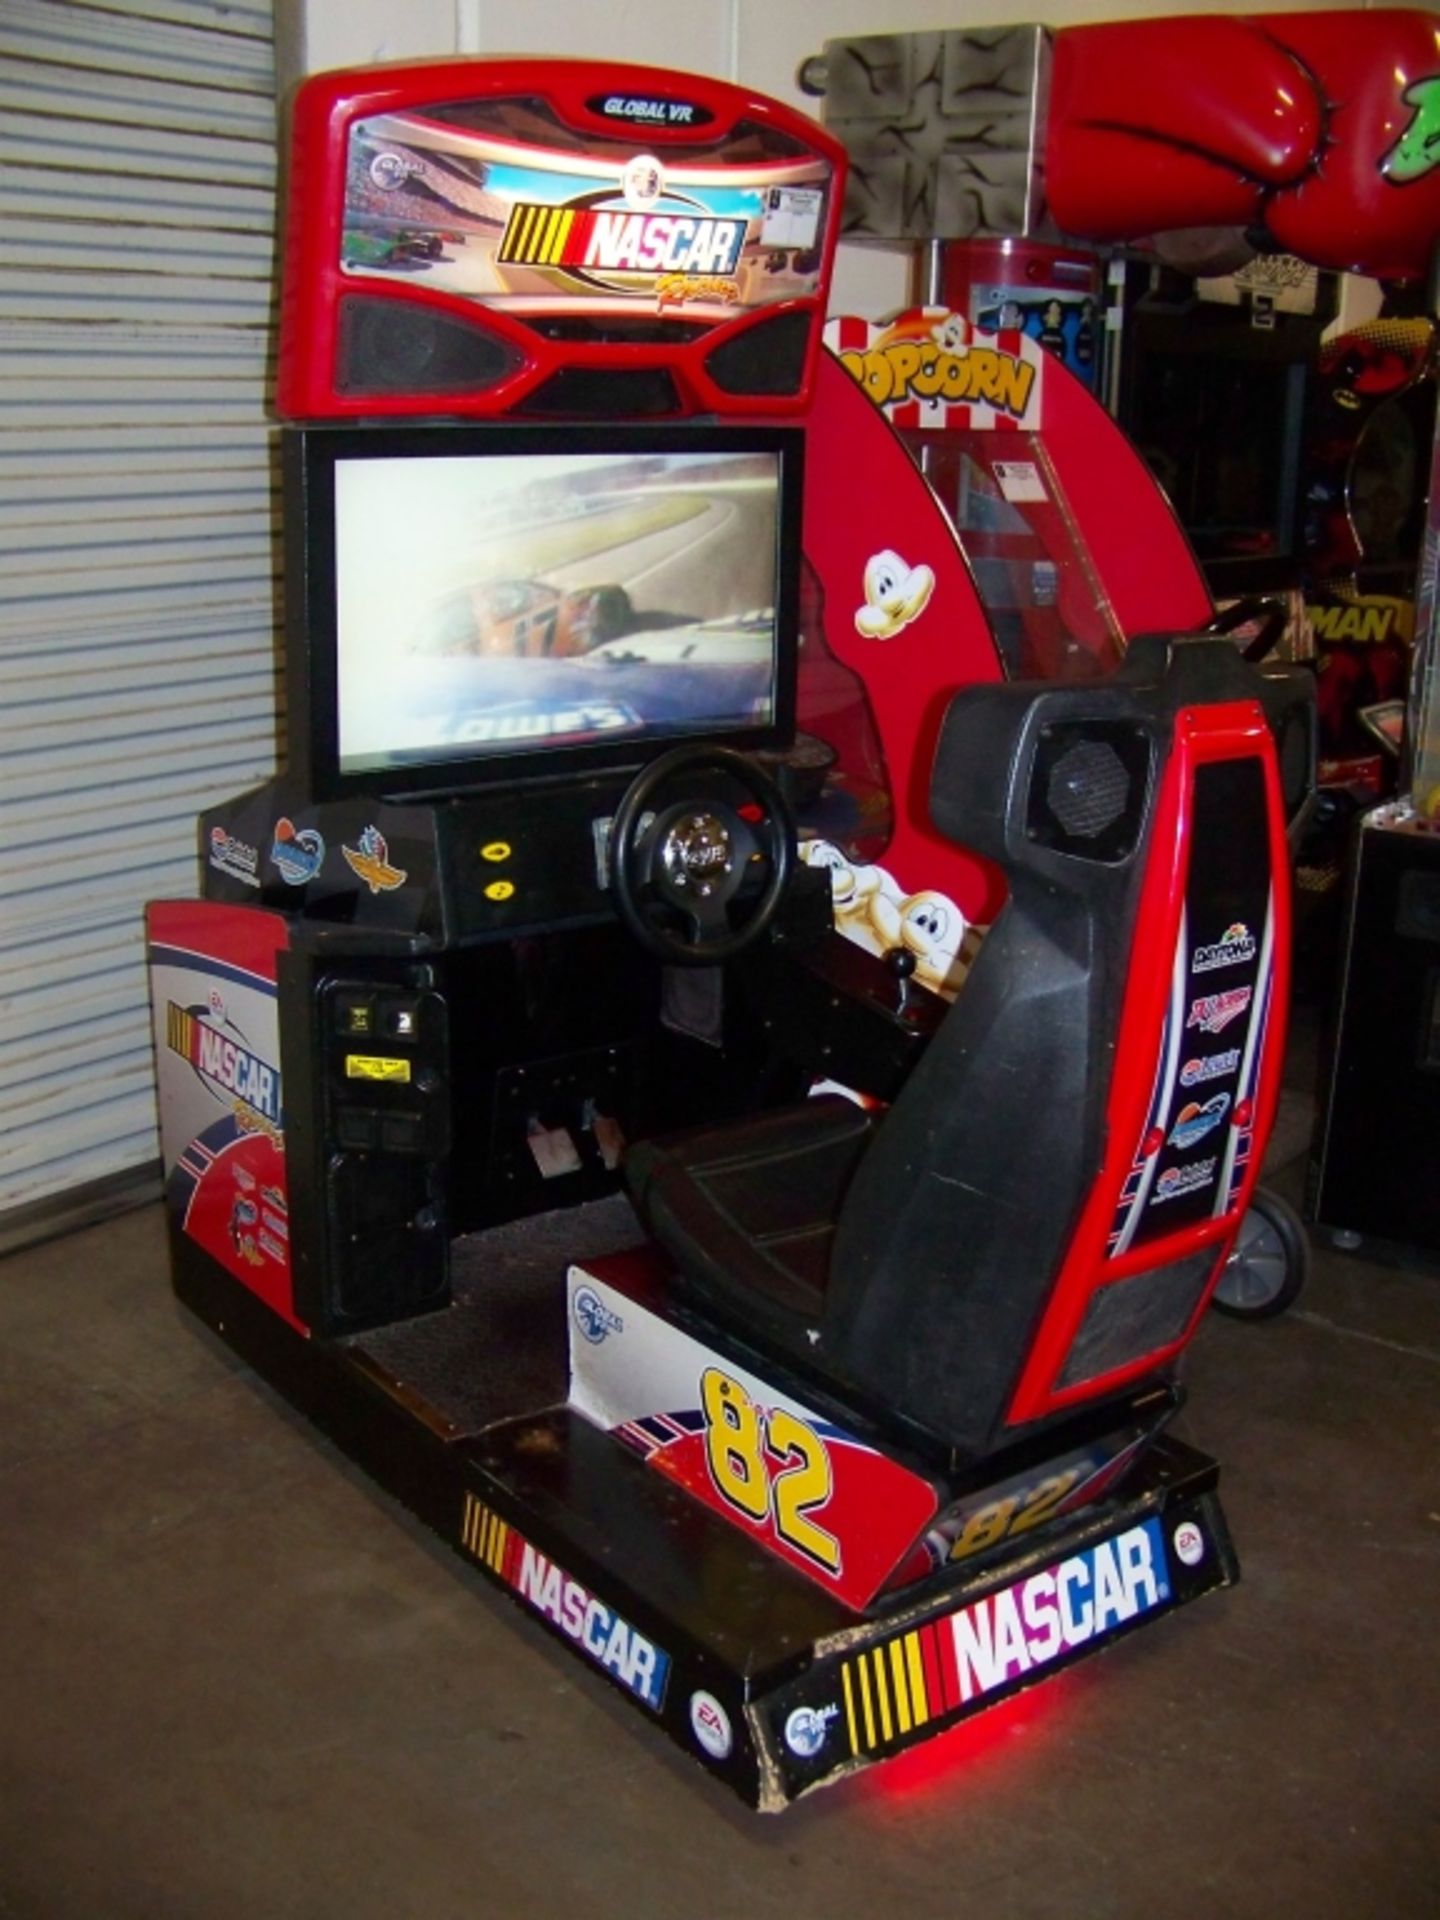 NASCAR RACING ARCADE GAME GLOBAL VR 32" LCD